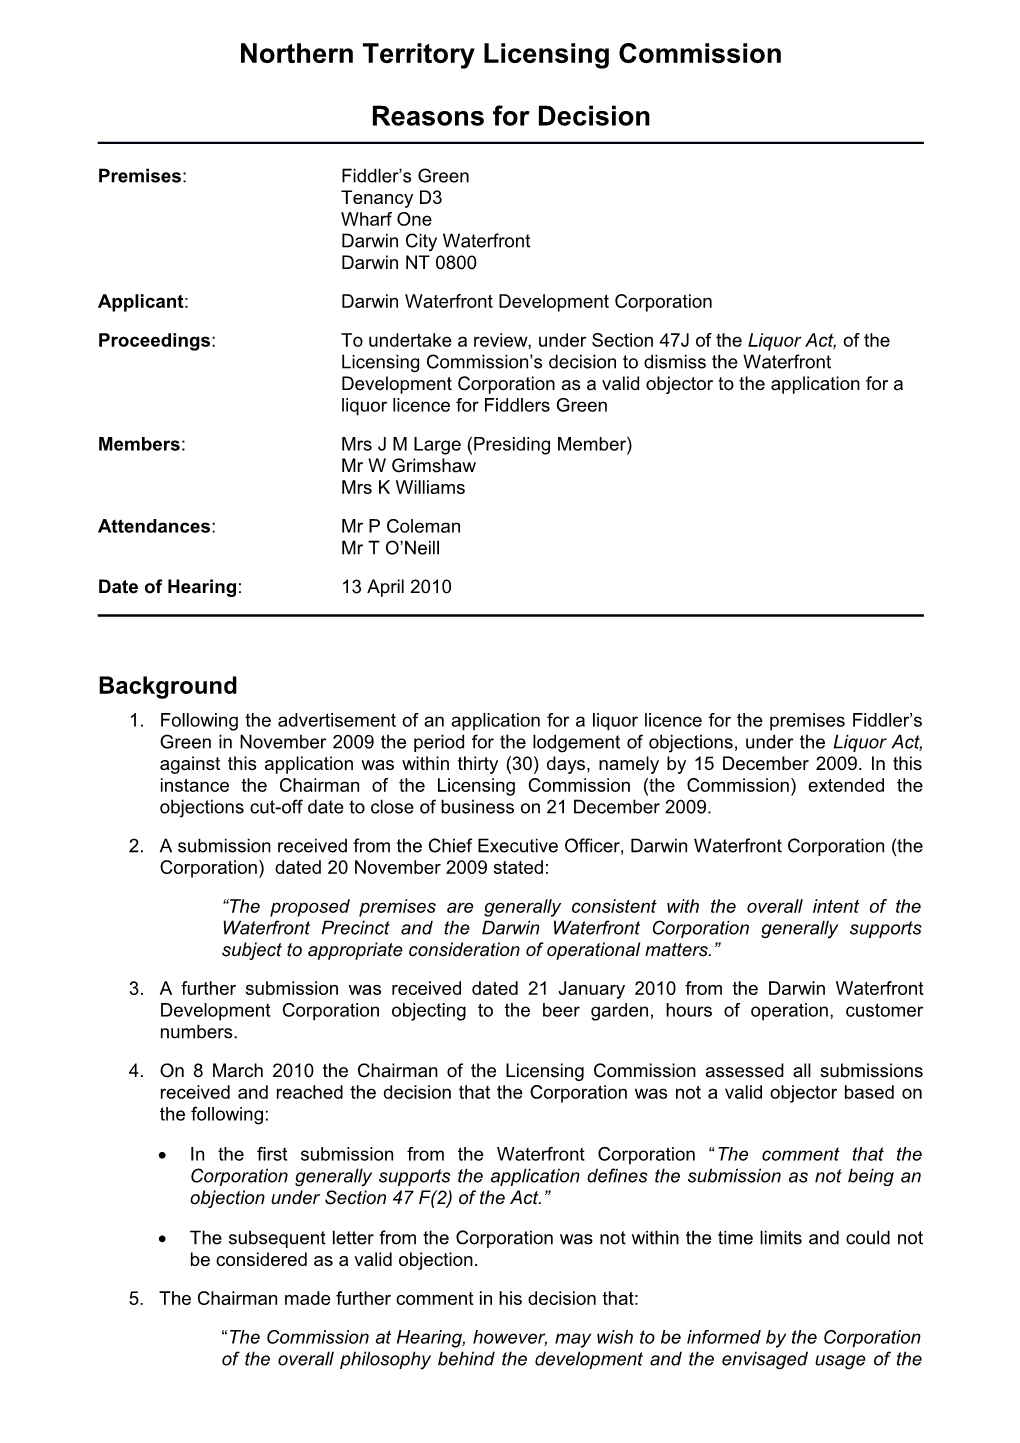 Applicant:Darwin Waterfront Development Corporation